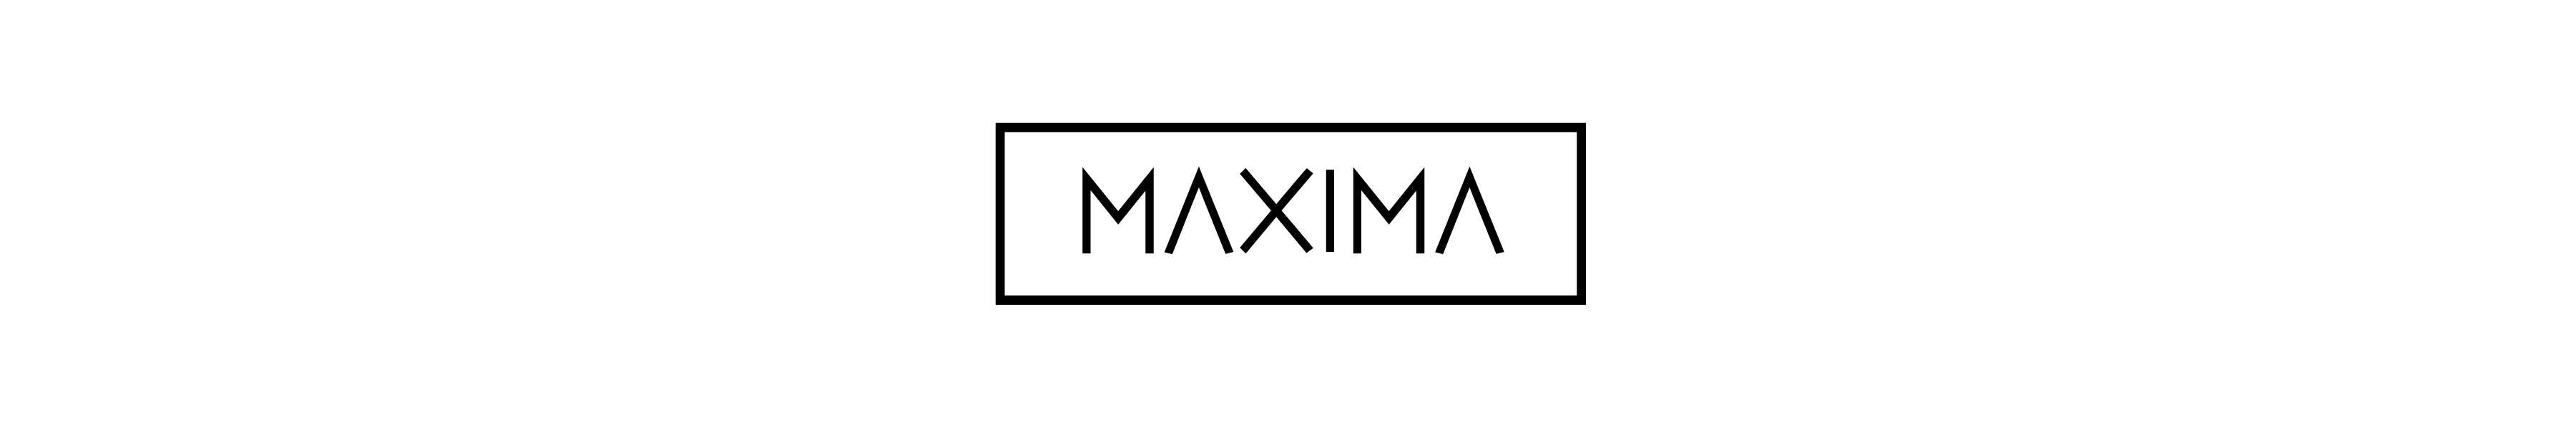 Maxima Apparel Corp.